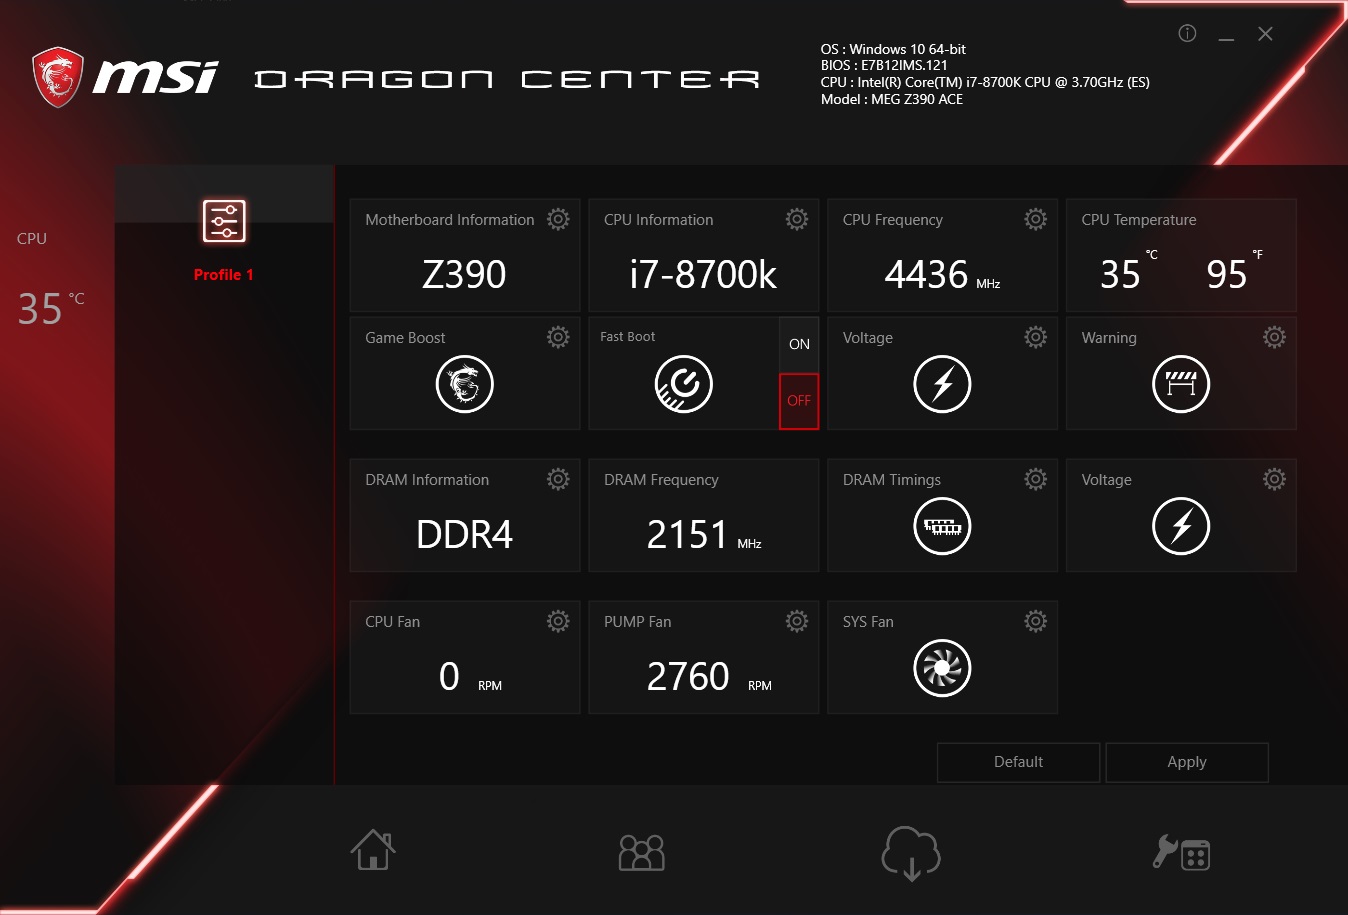 msi dragon center bios update